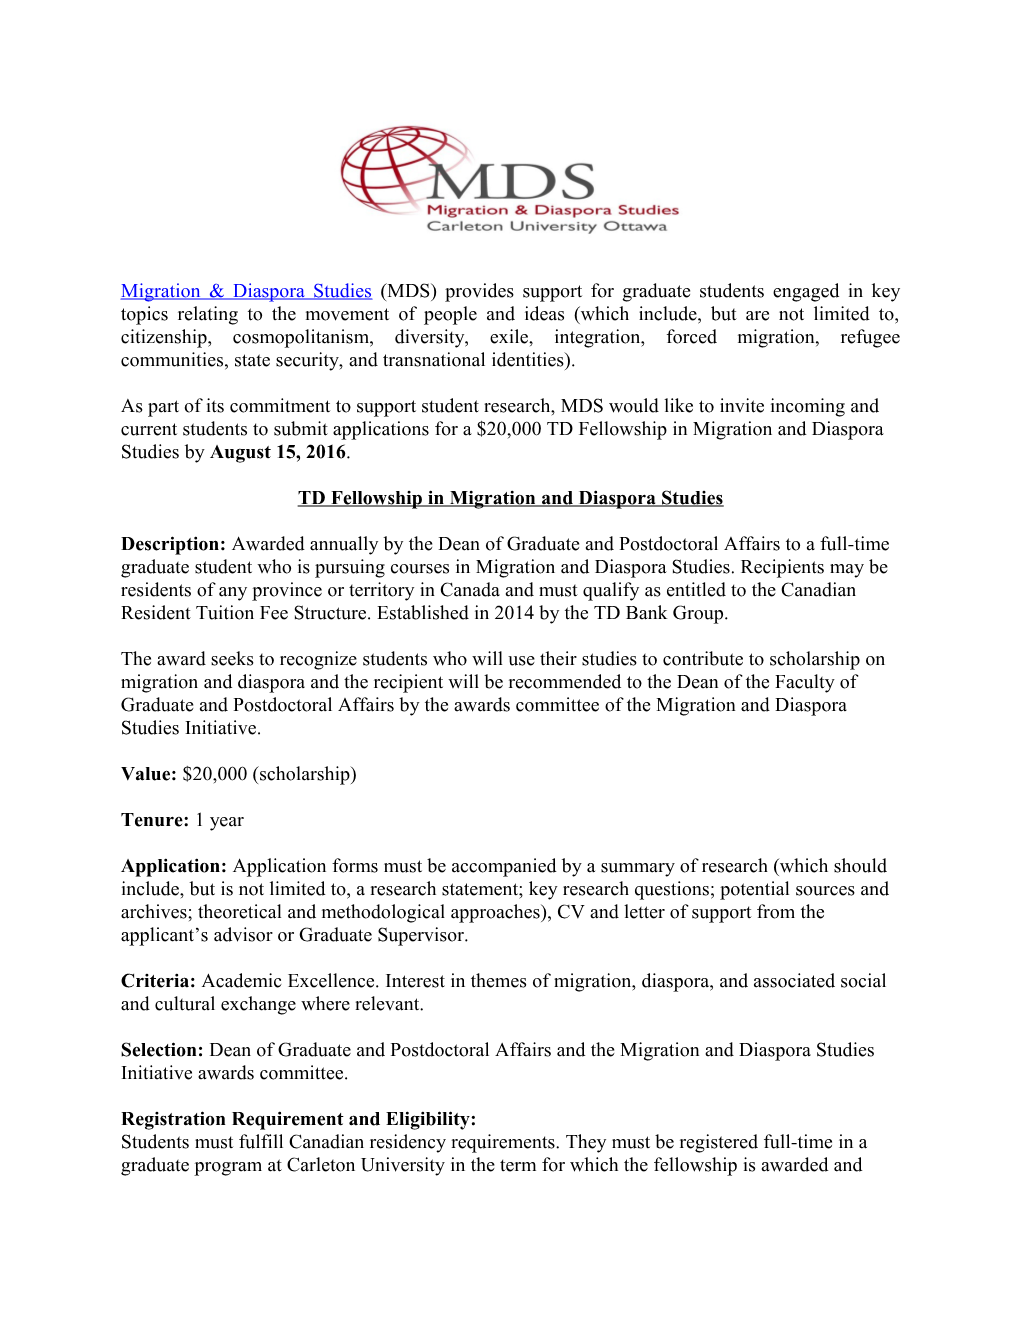 TD Fellowship in Migration and Diaspora Studies